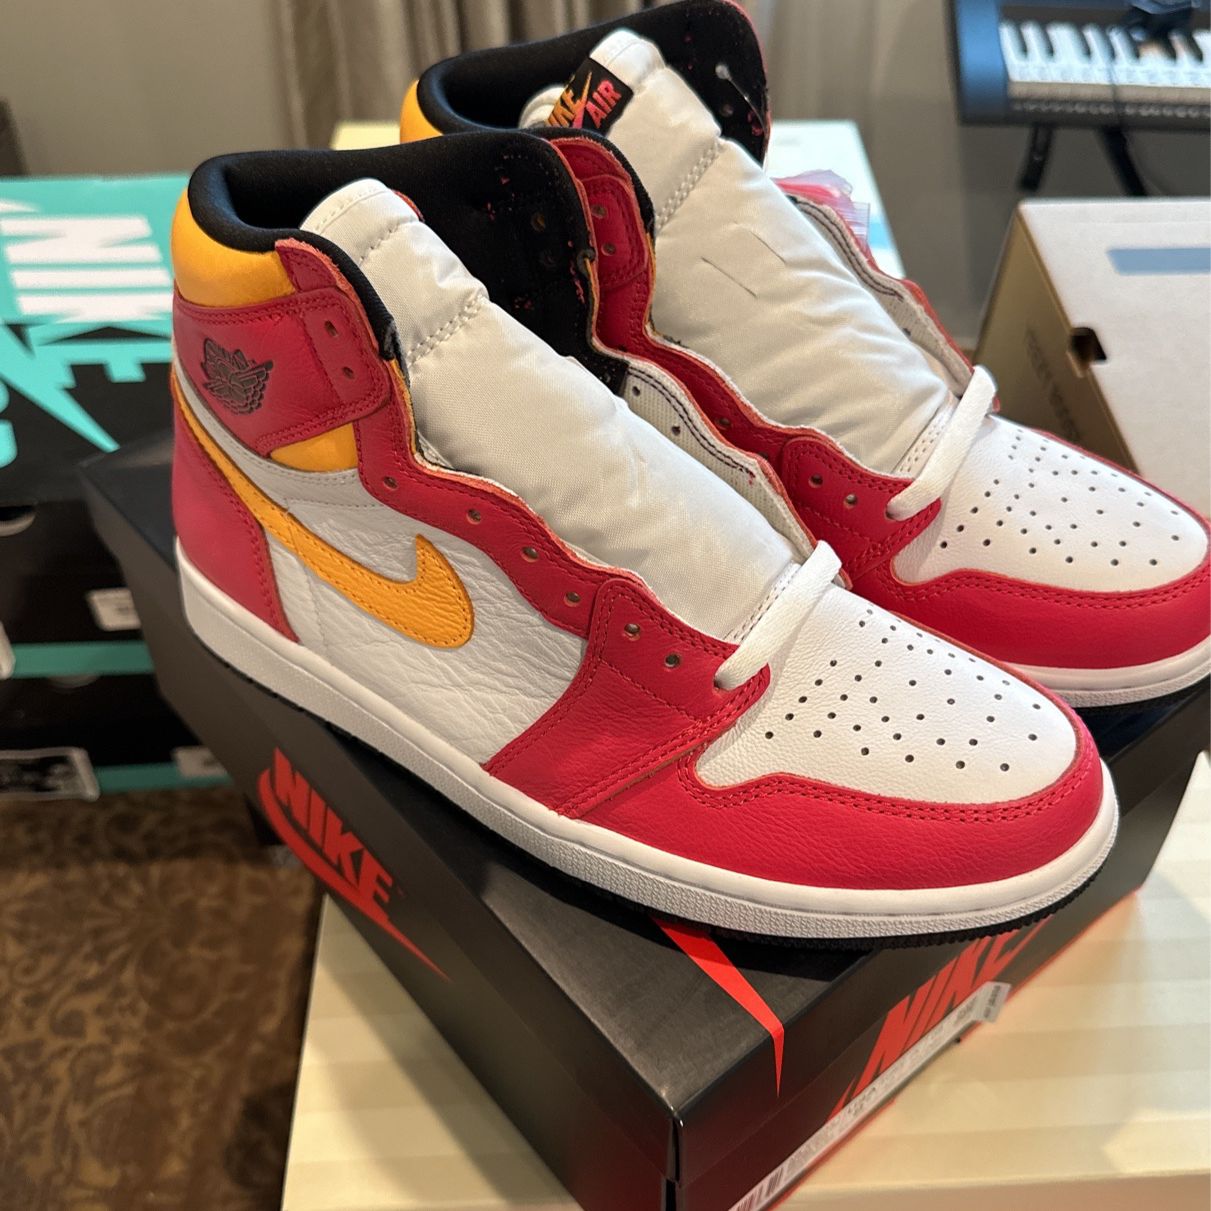 Air Jordan 1 Fusion Red Size 8.5